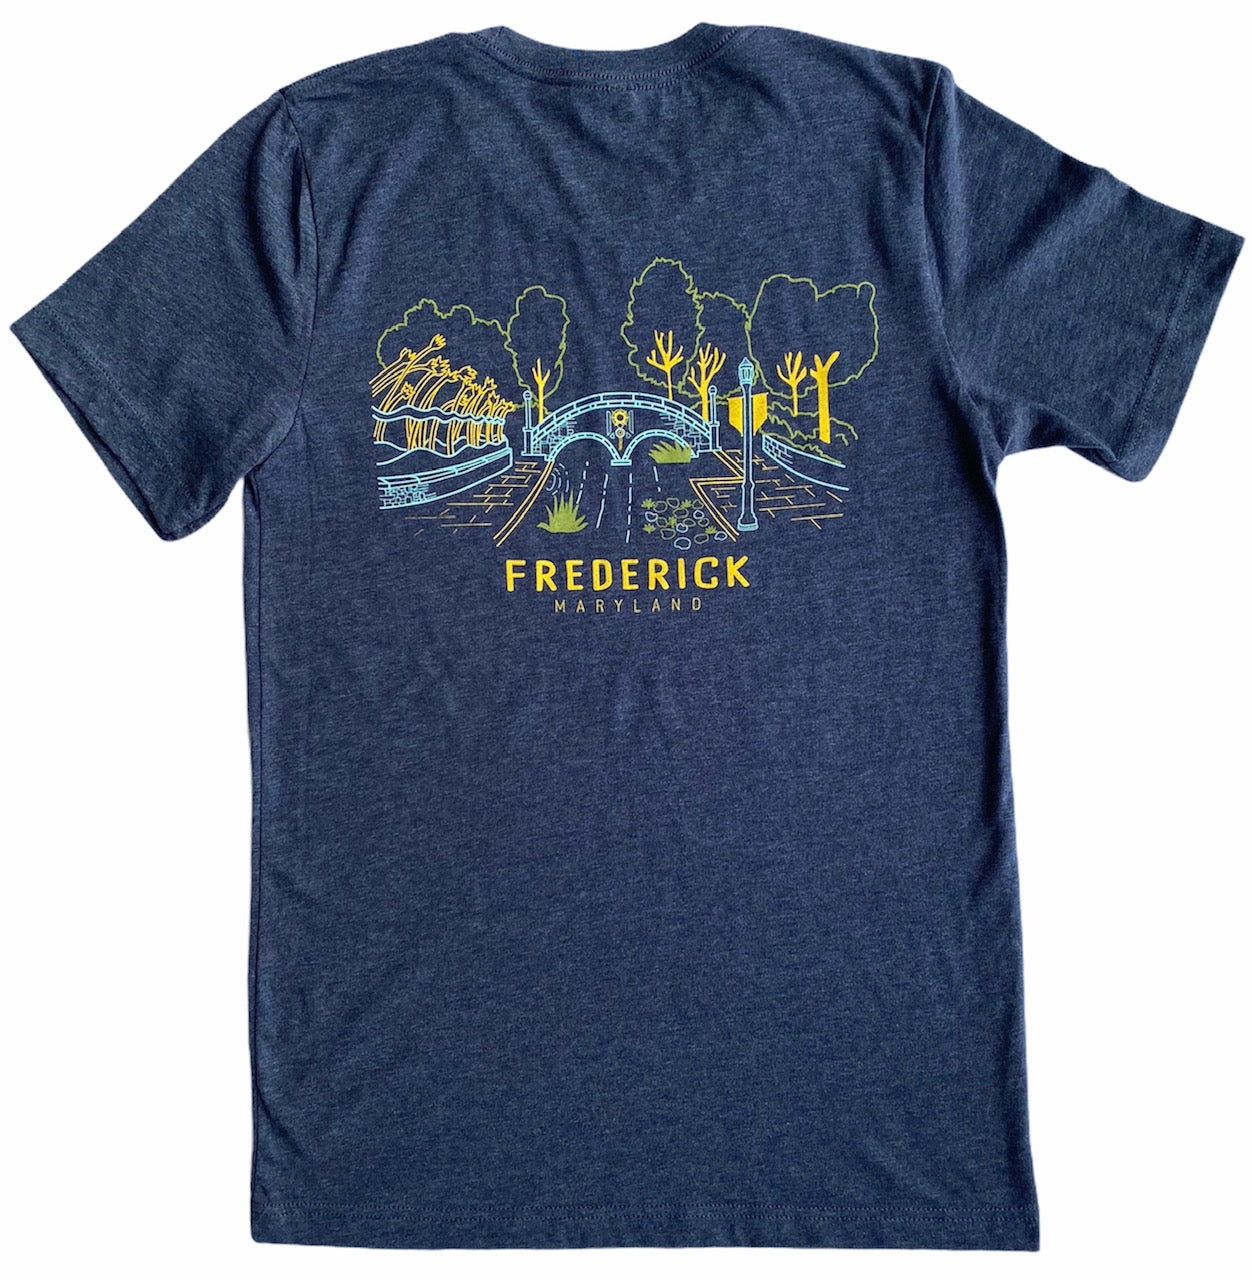 Frederick Maryland T-shirt - Carroll Creek